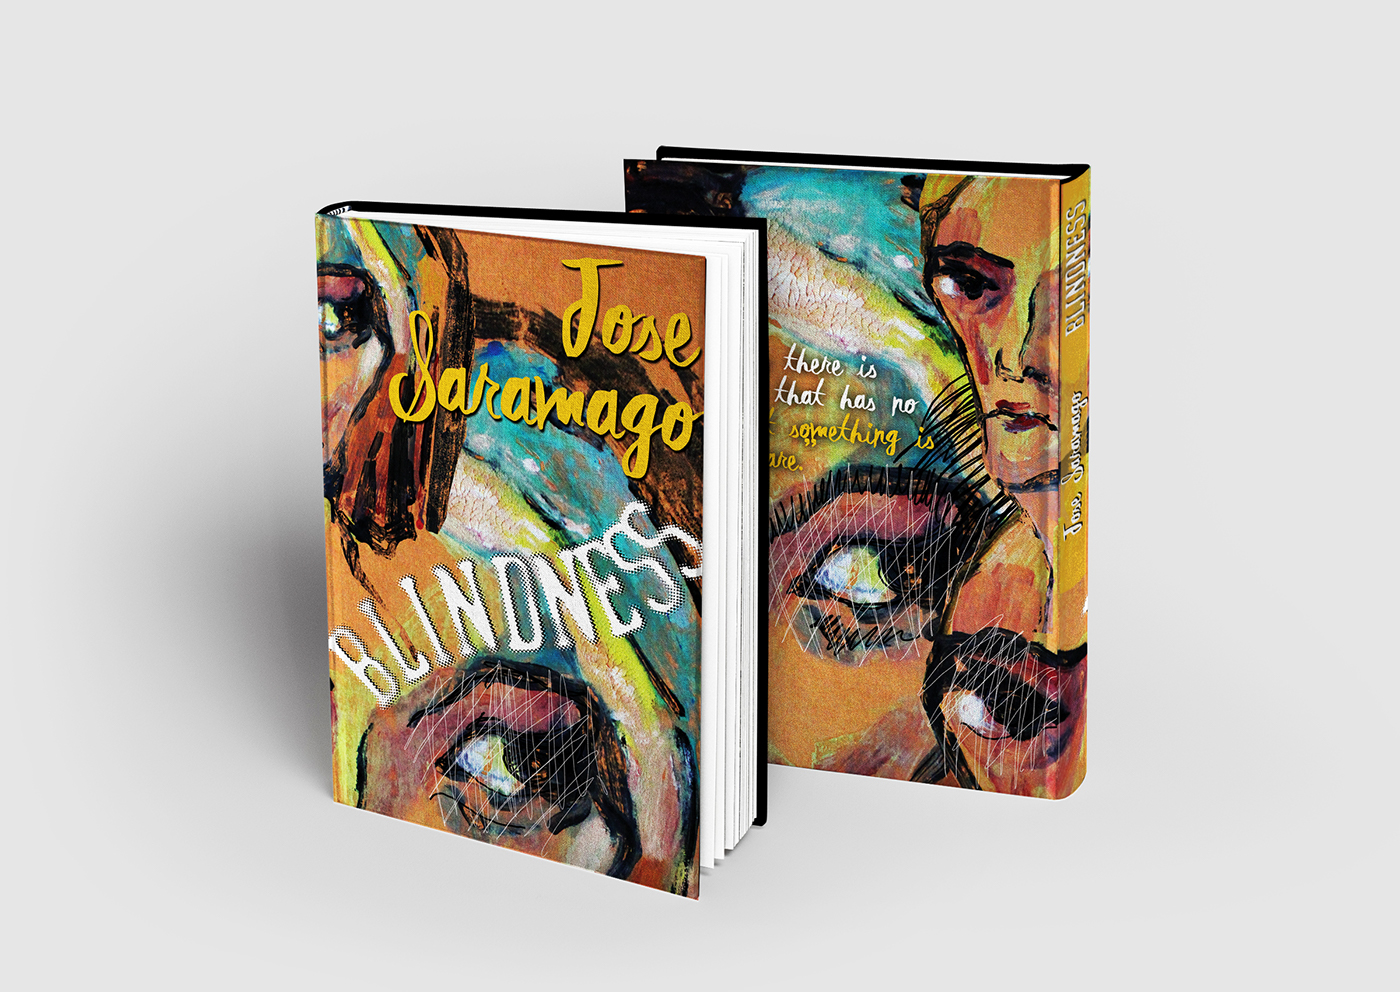 josé saramago Saramago blindness book cover book cover